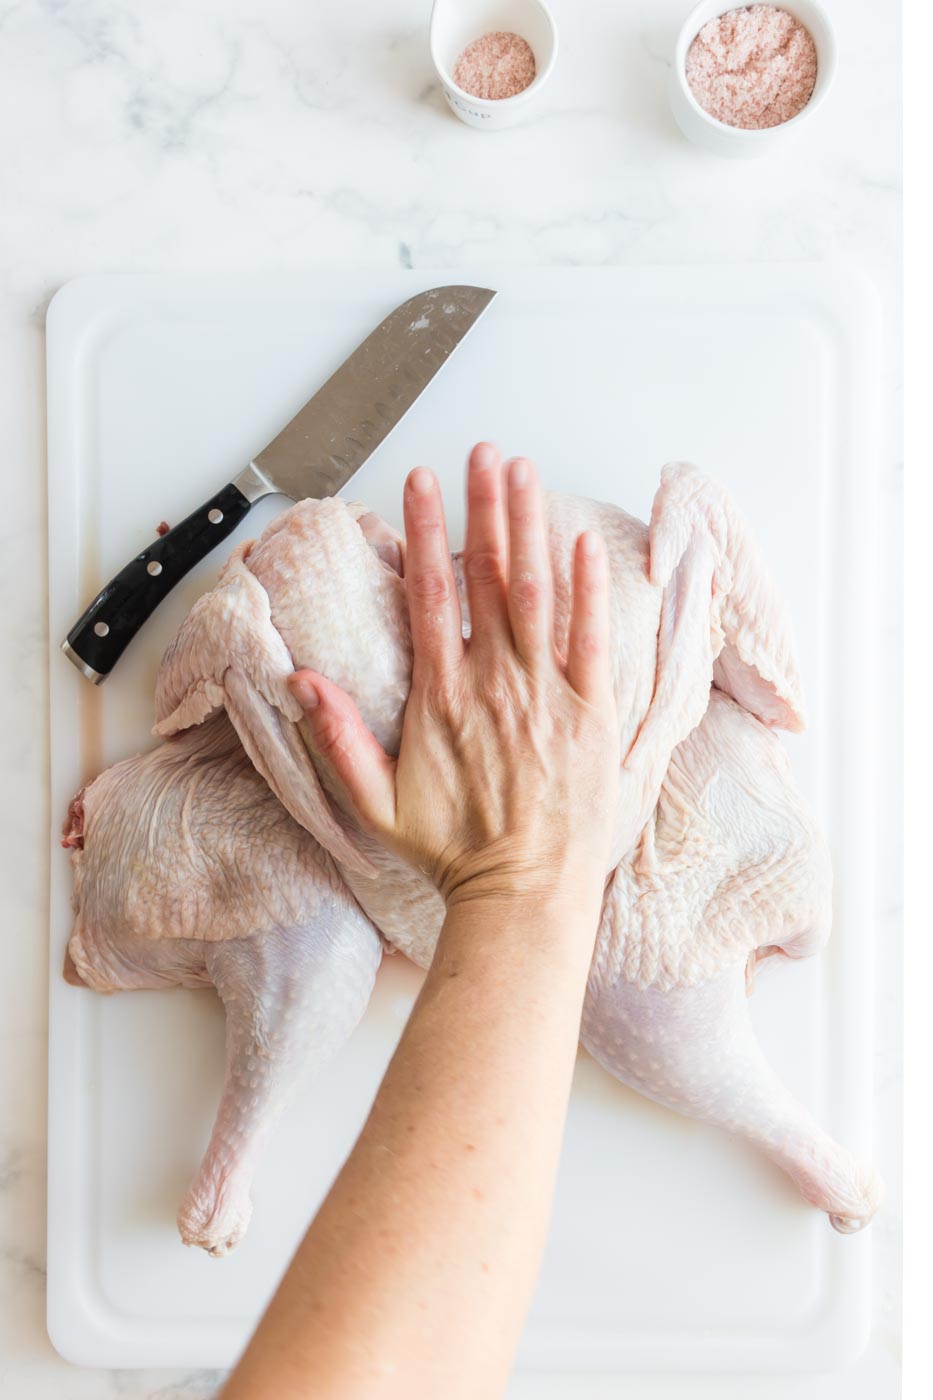 a hand pressing down between turkey breasts to flatten it